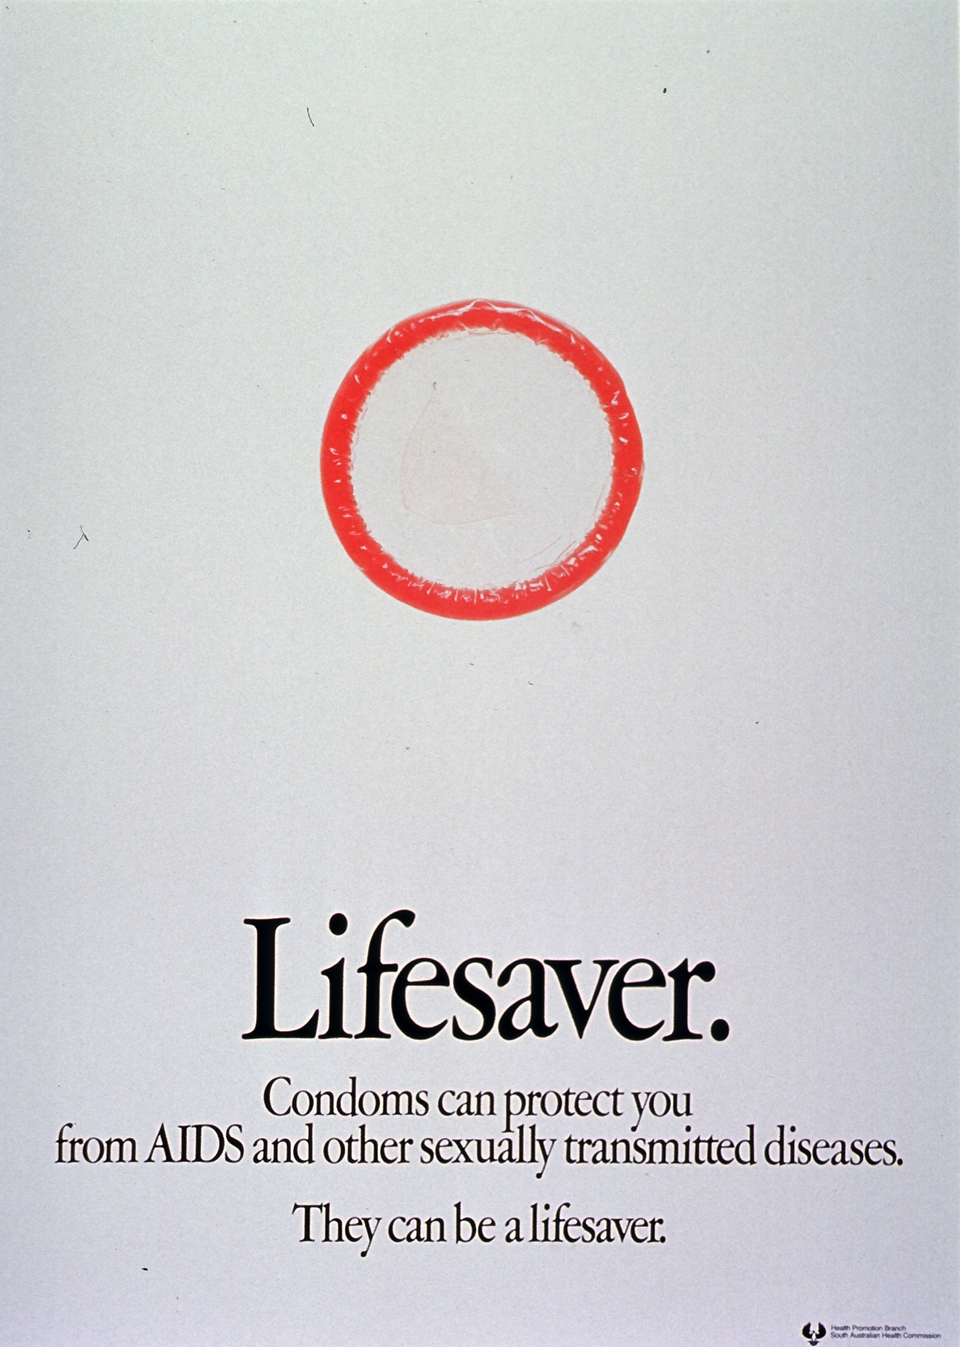 Visual Culture Hivaids Safe Sex And Condoms Lifesaver Condoms 